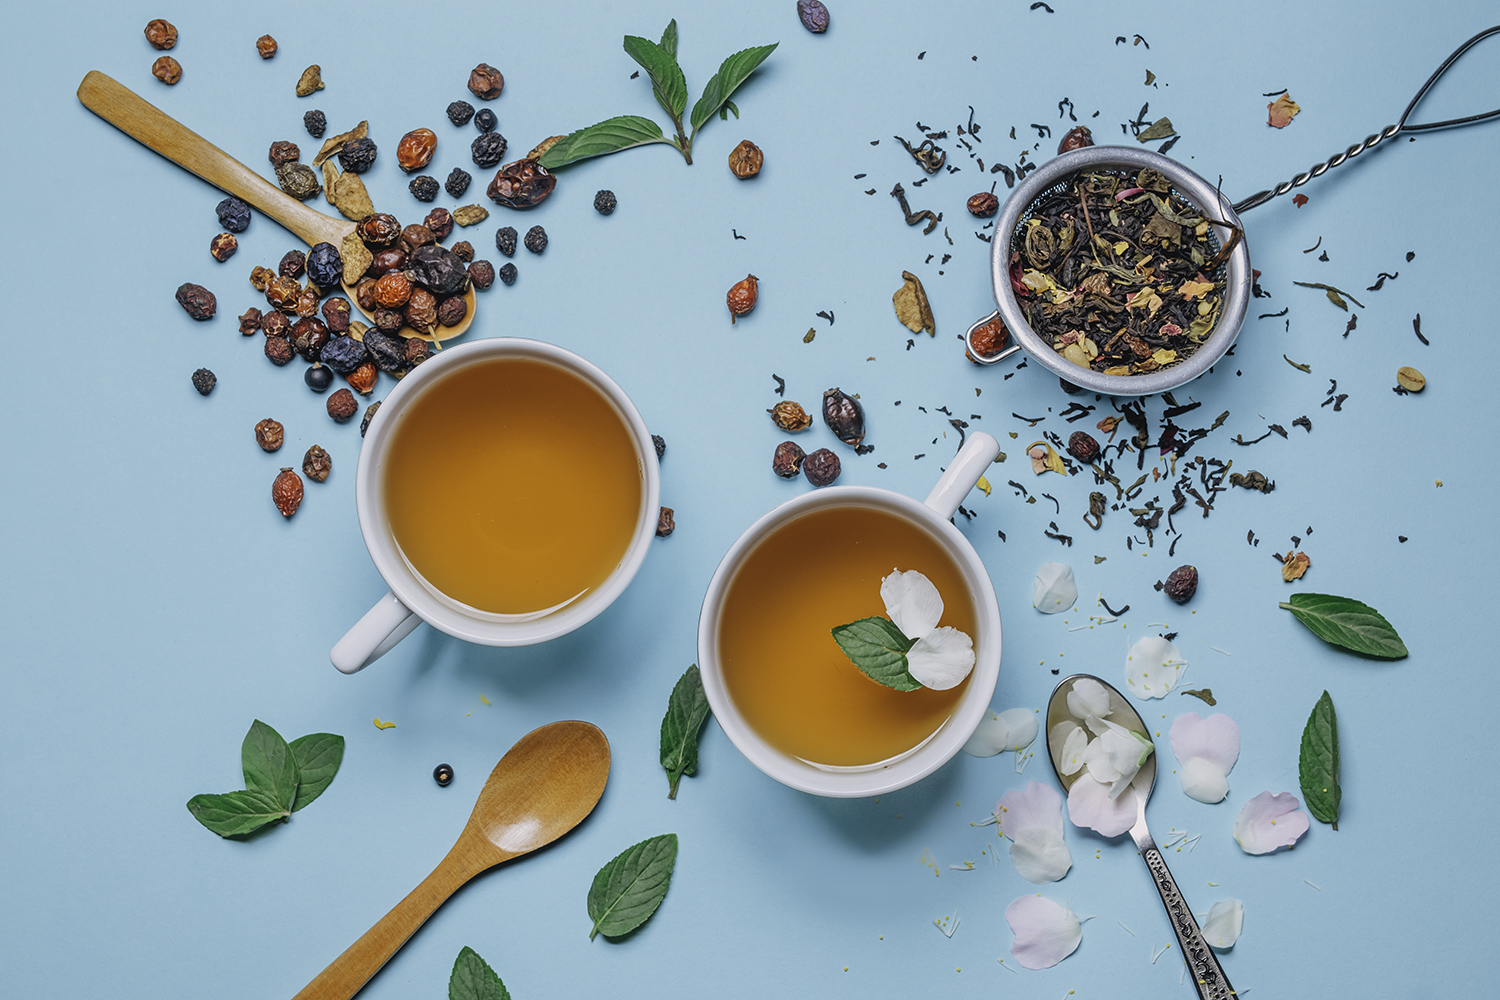 Летние чаи - многообразие вкусов и ароматов